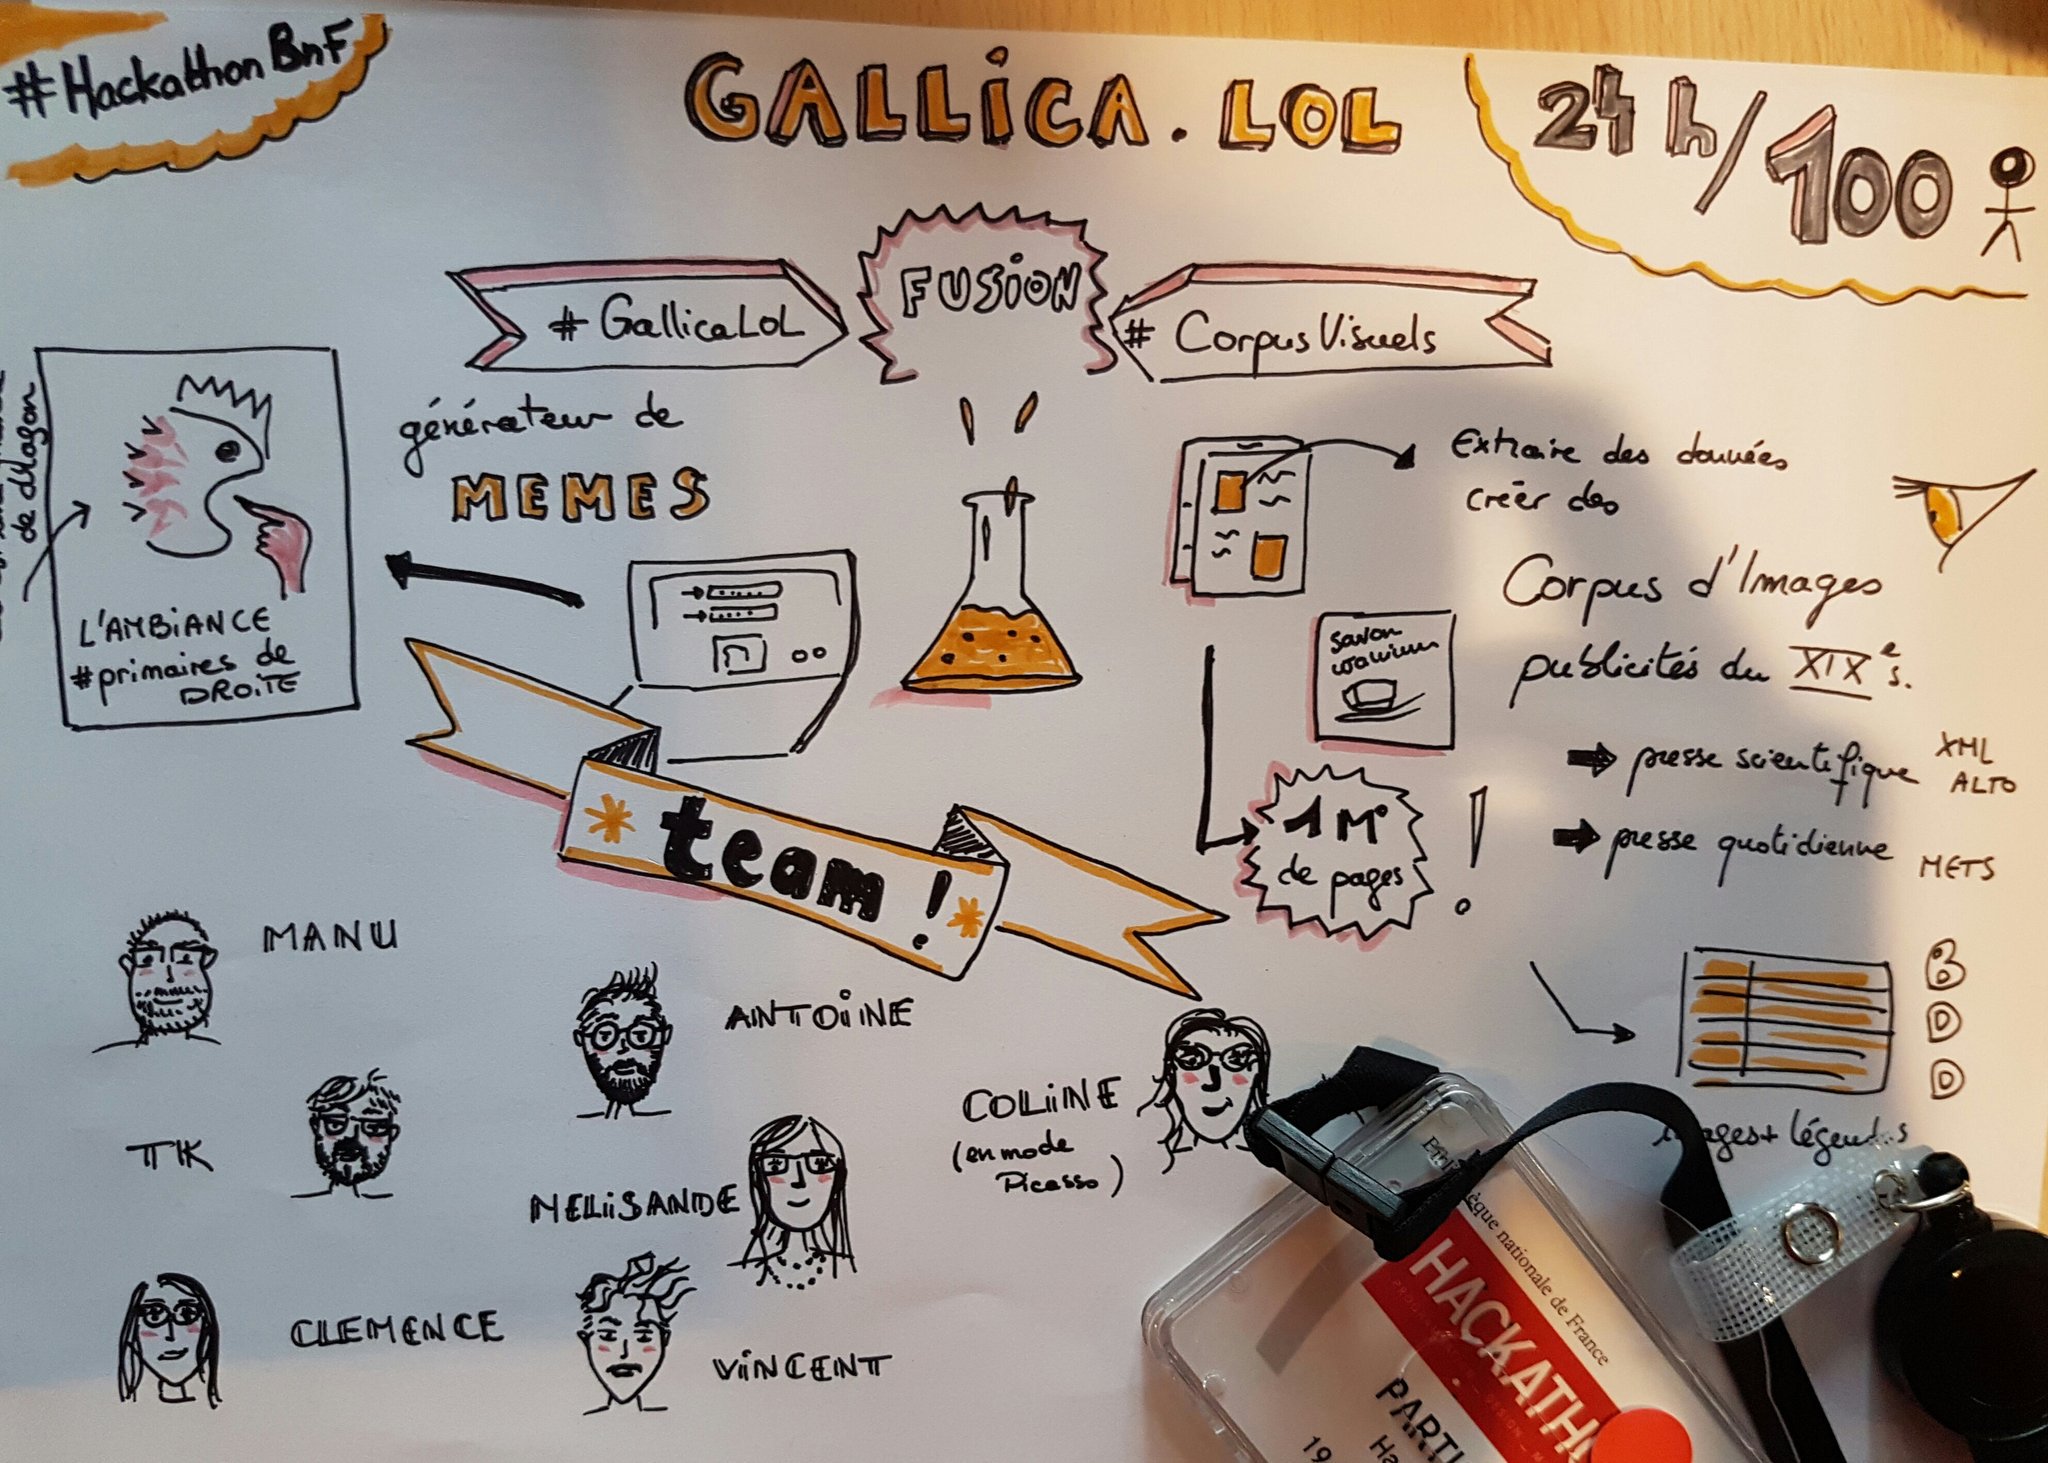 #hackathonBnF #GallicaLOL https://t.co/lSYpMduUmo